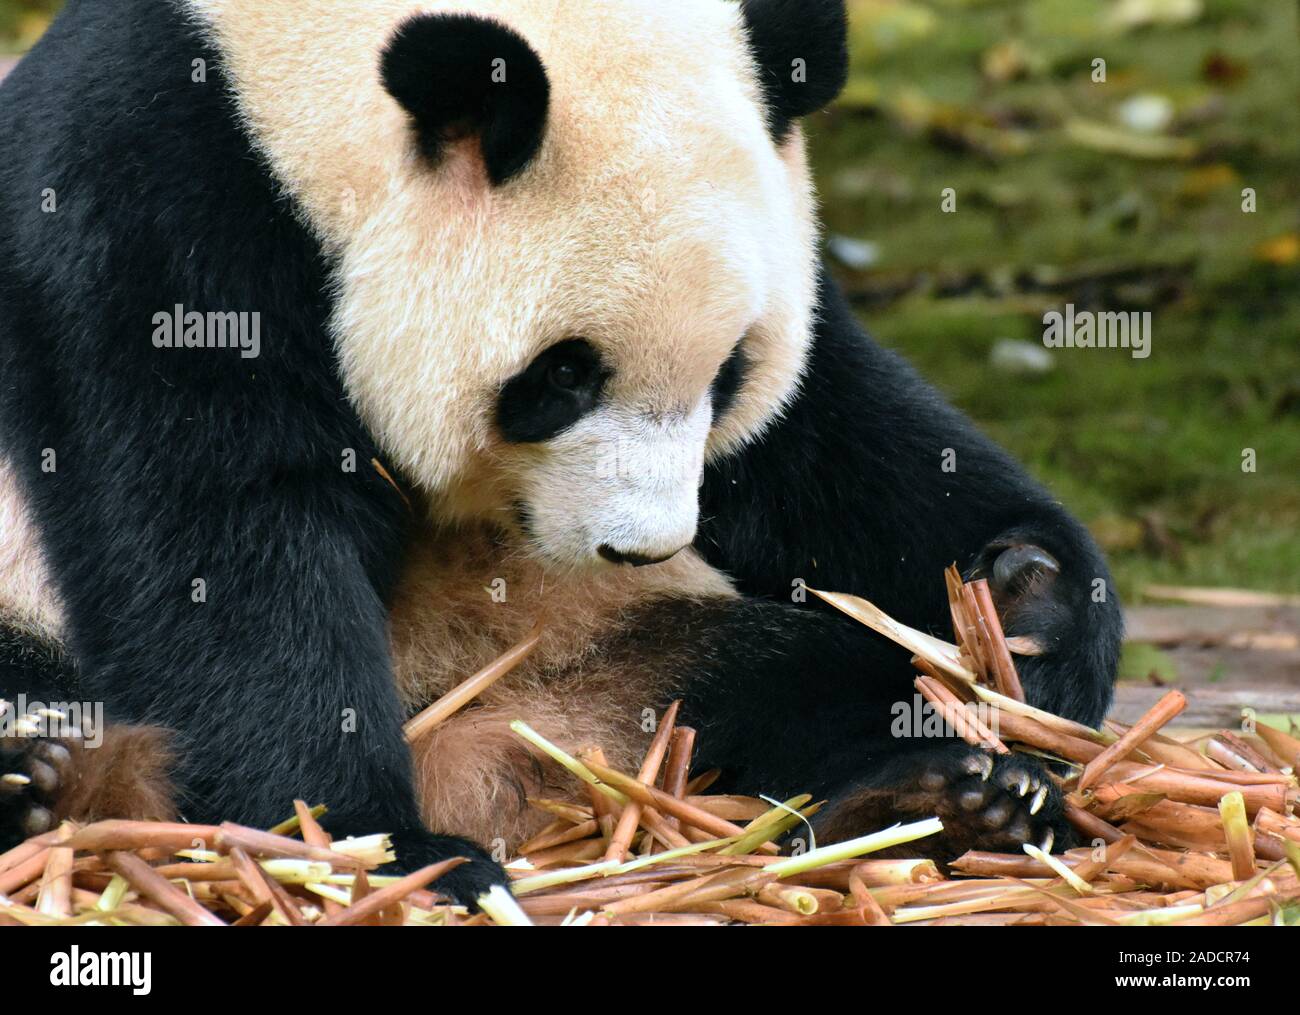 Cute panda bear picks bamboo shoots to eat Stock Photo